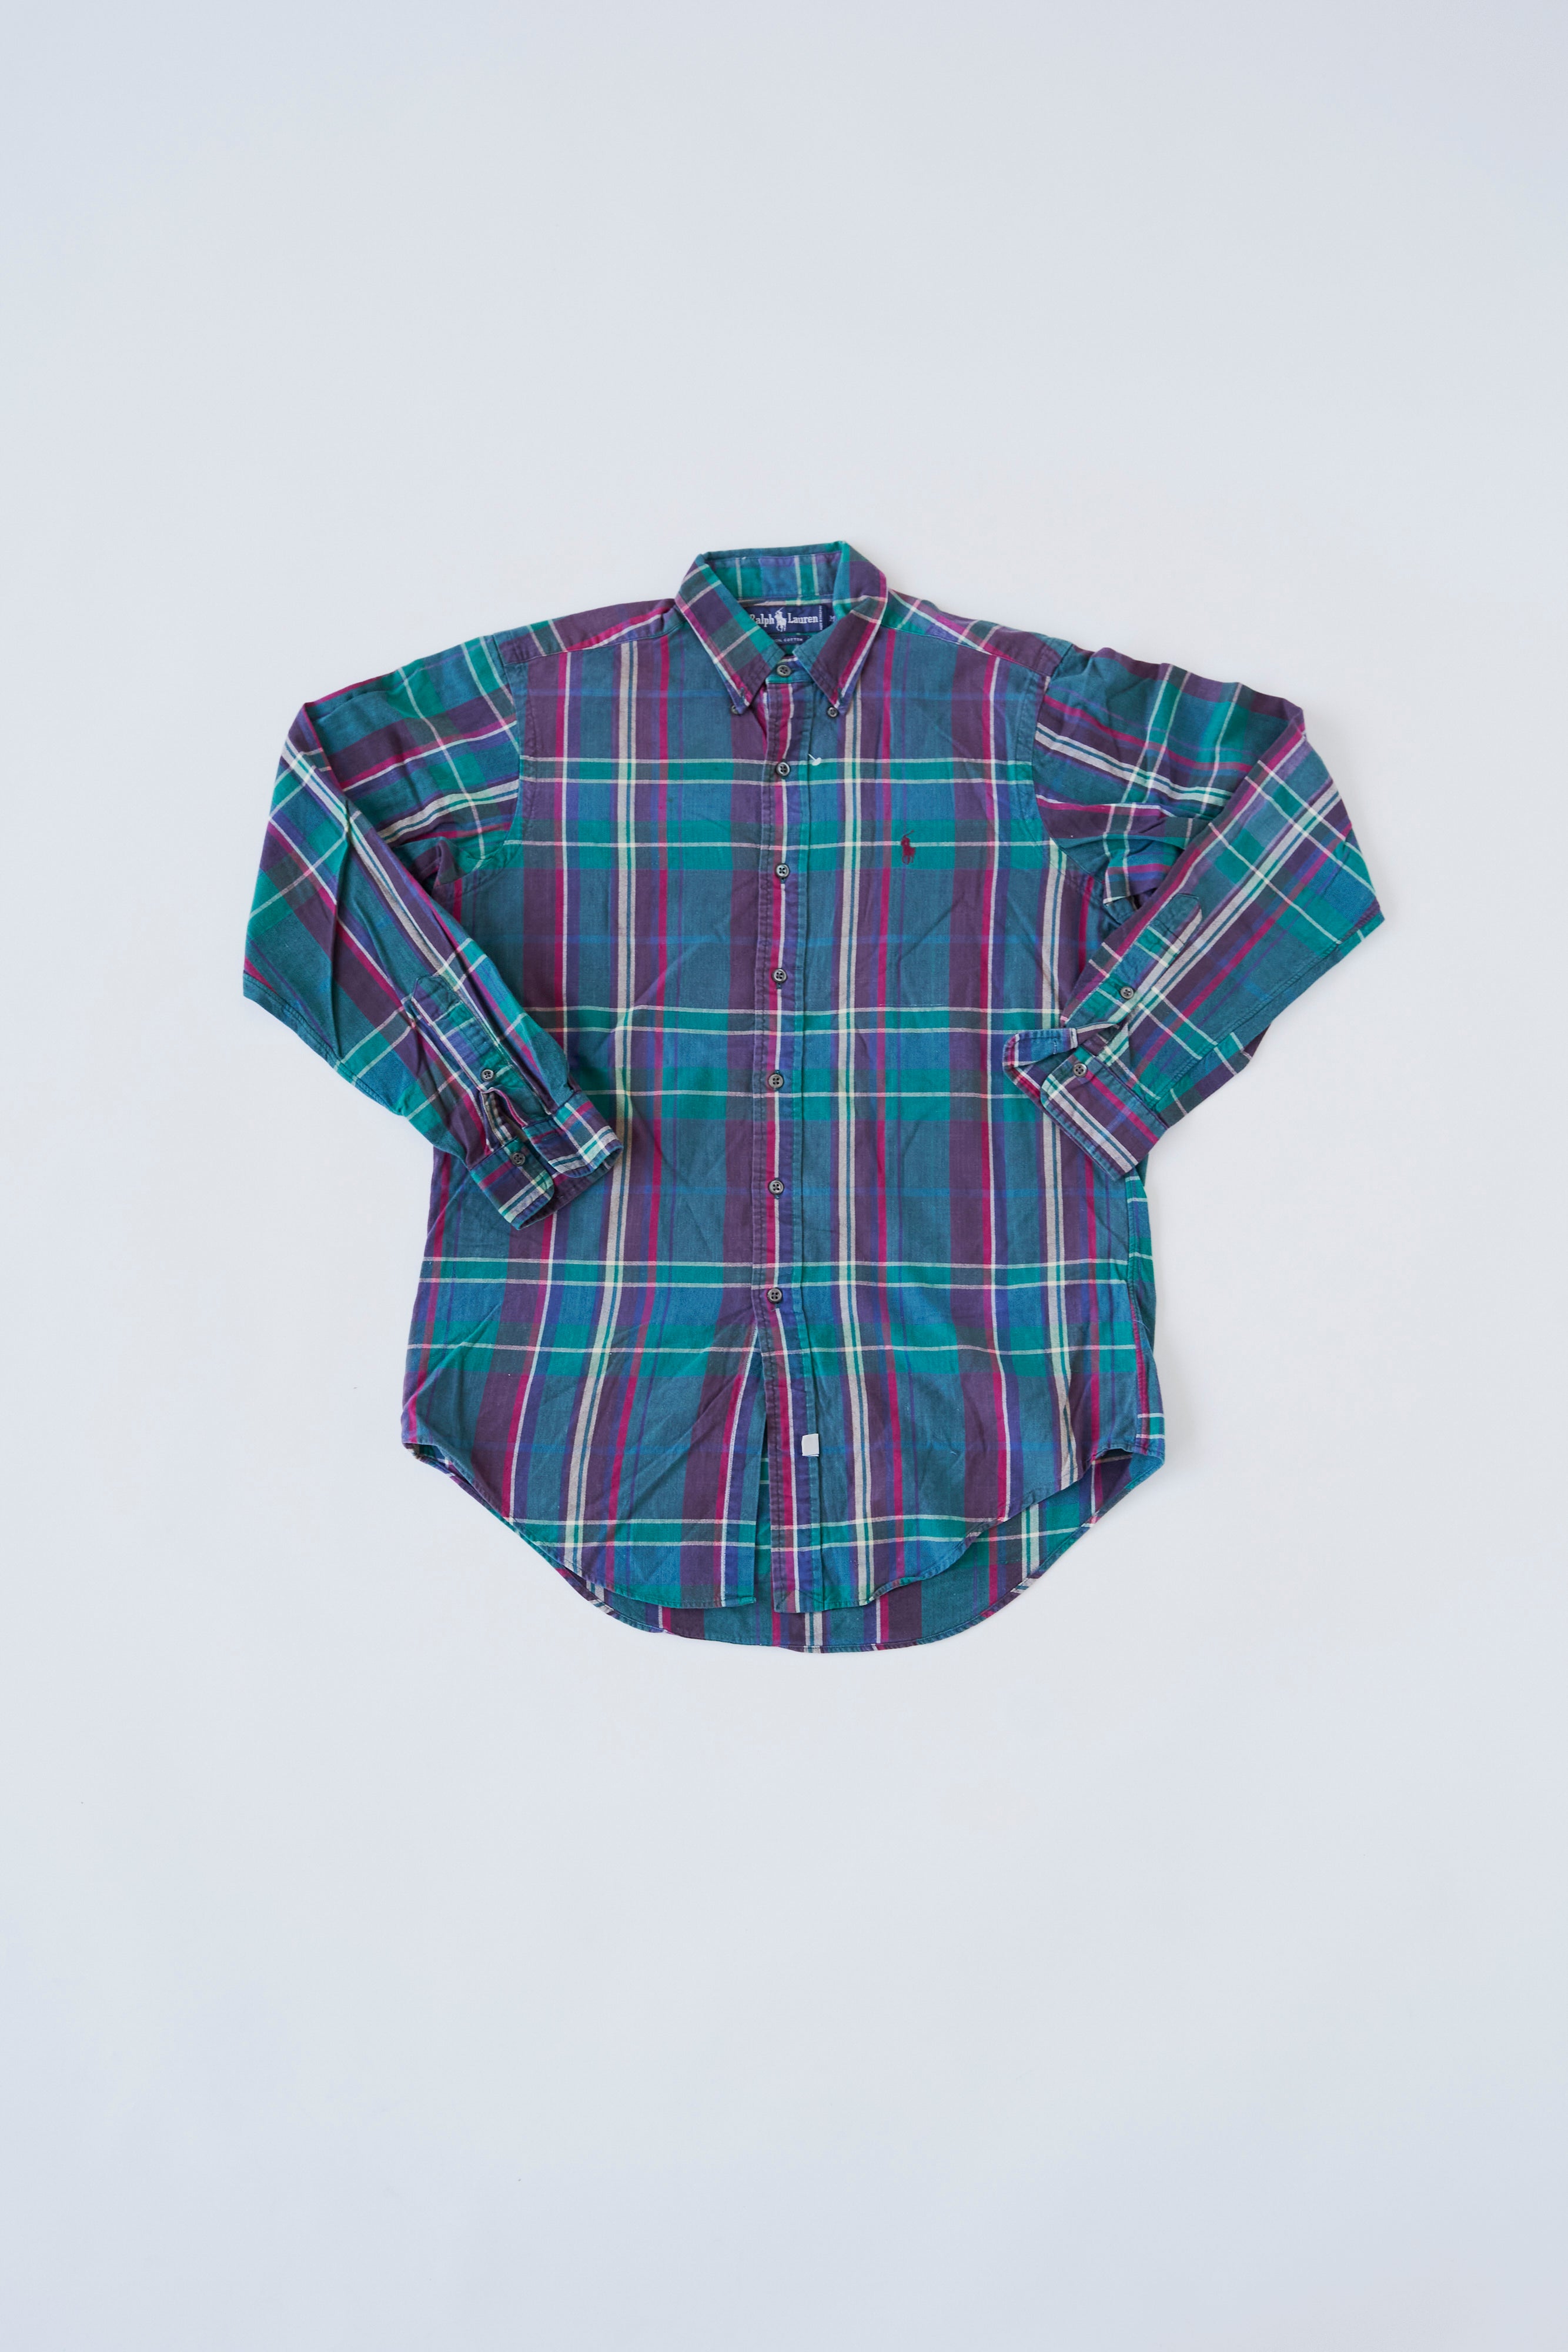 Vintage /  Ralph Lauren shirts